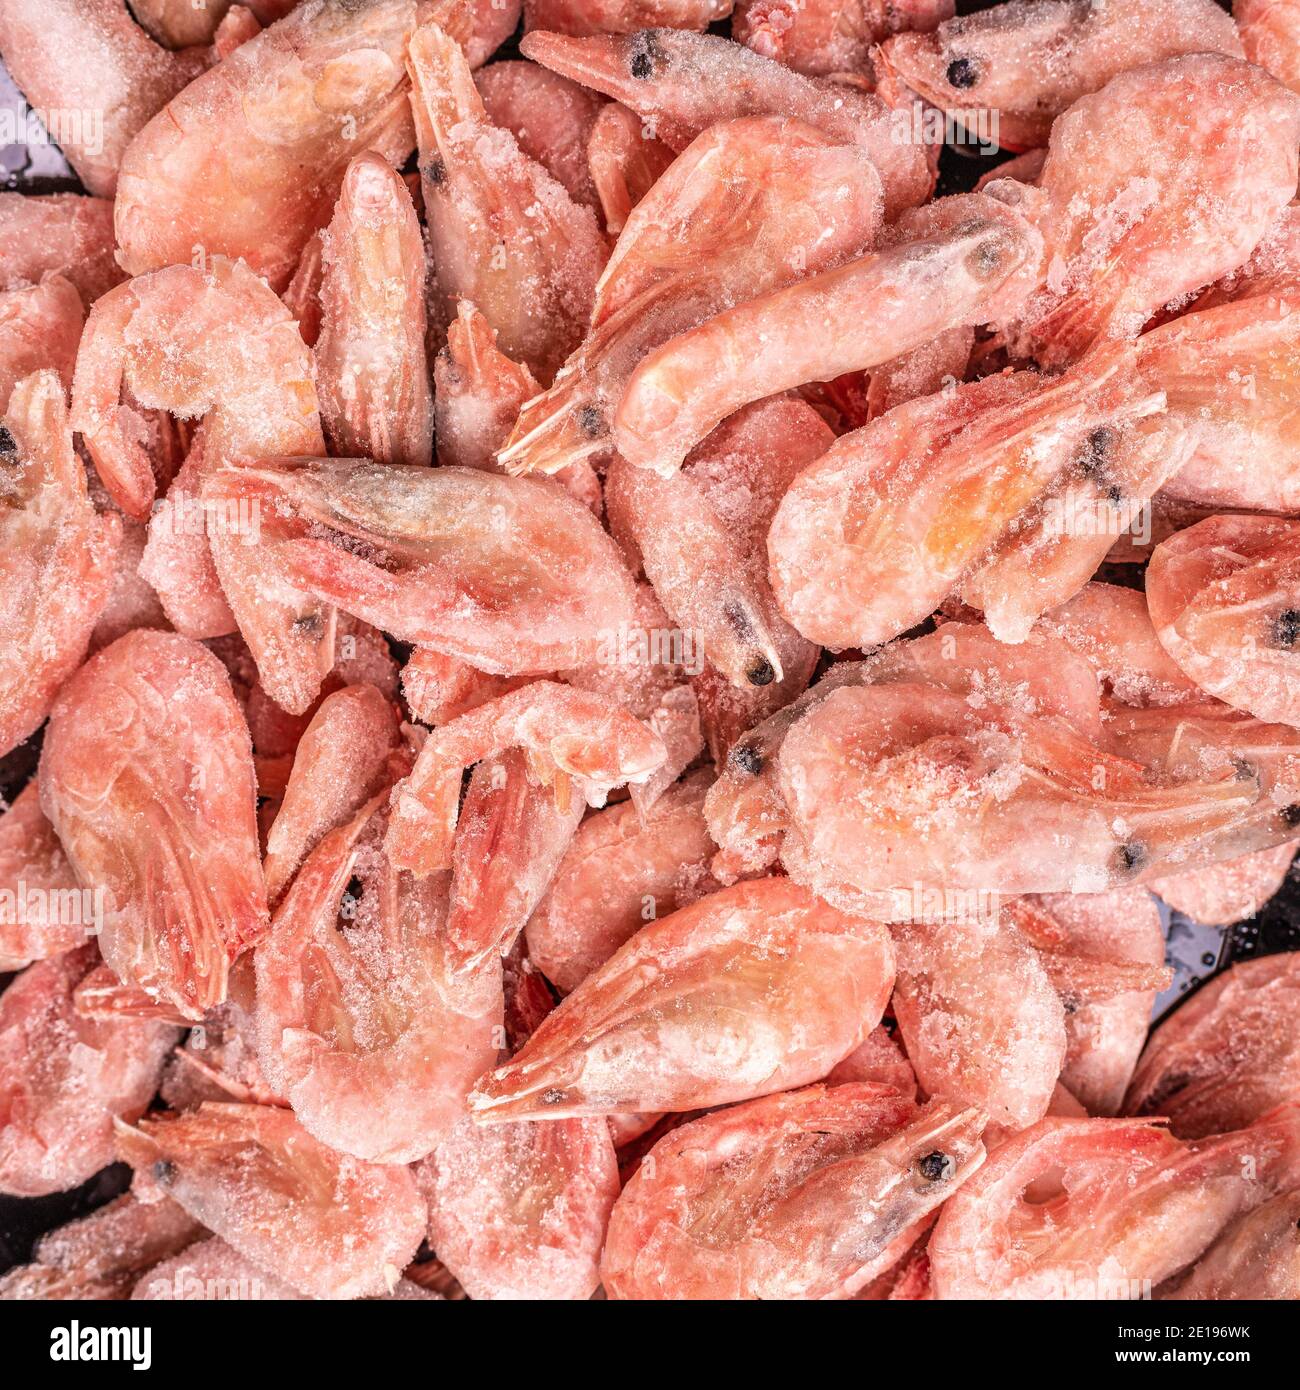 frozen shrimp. Raw shrimp background. Pile of frozen shrimps on white background. Close-up of frozen prawns. Shrimp and ice. top view. square image Stock Photo